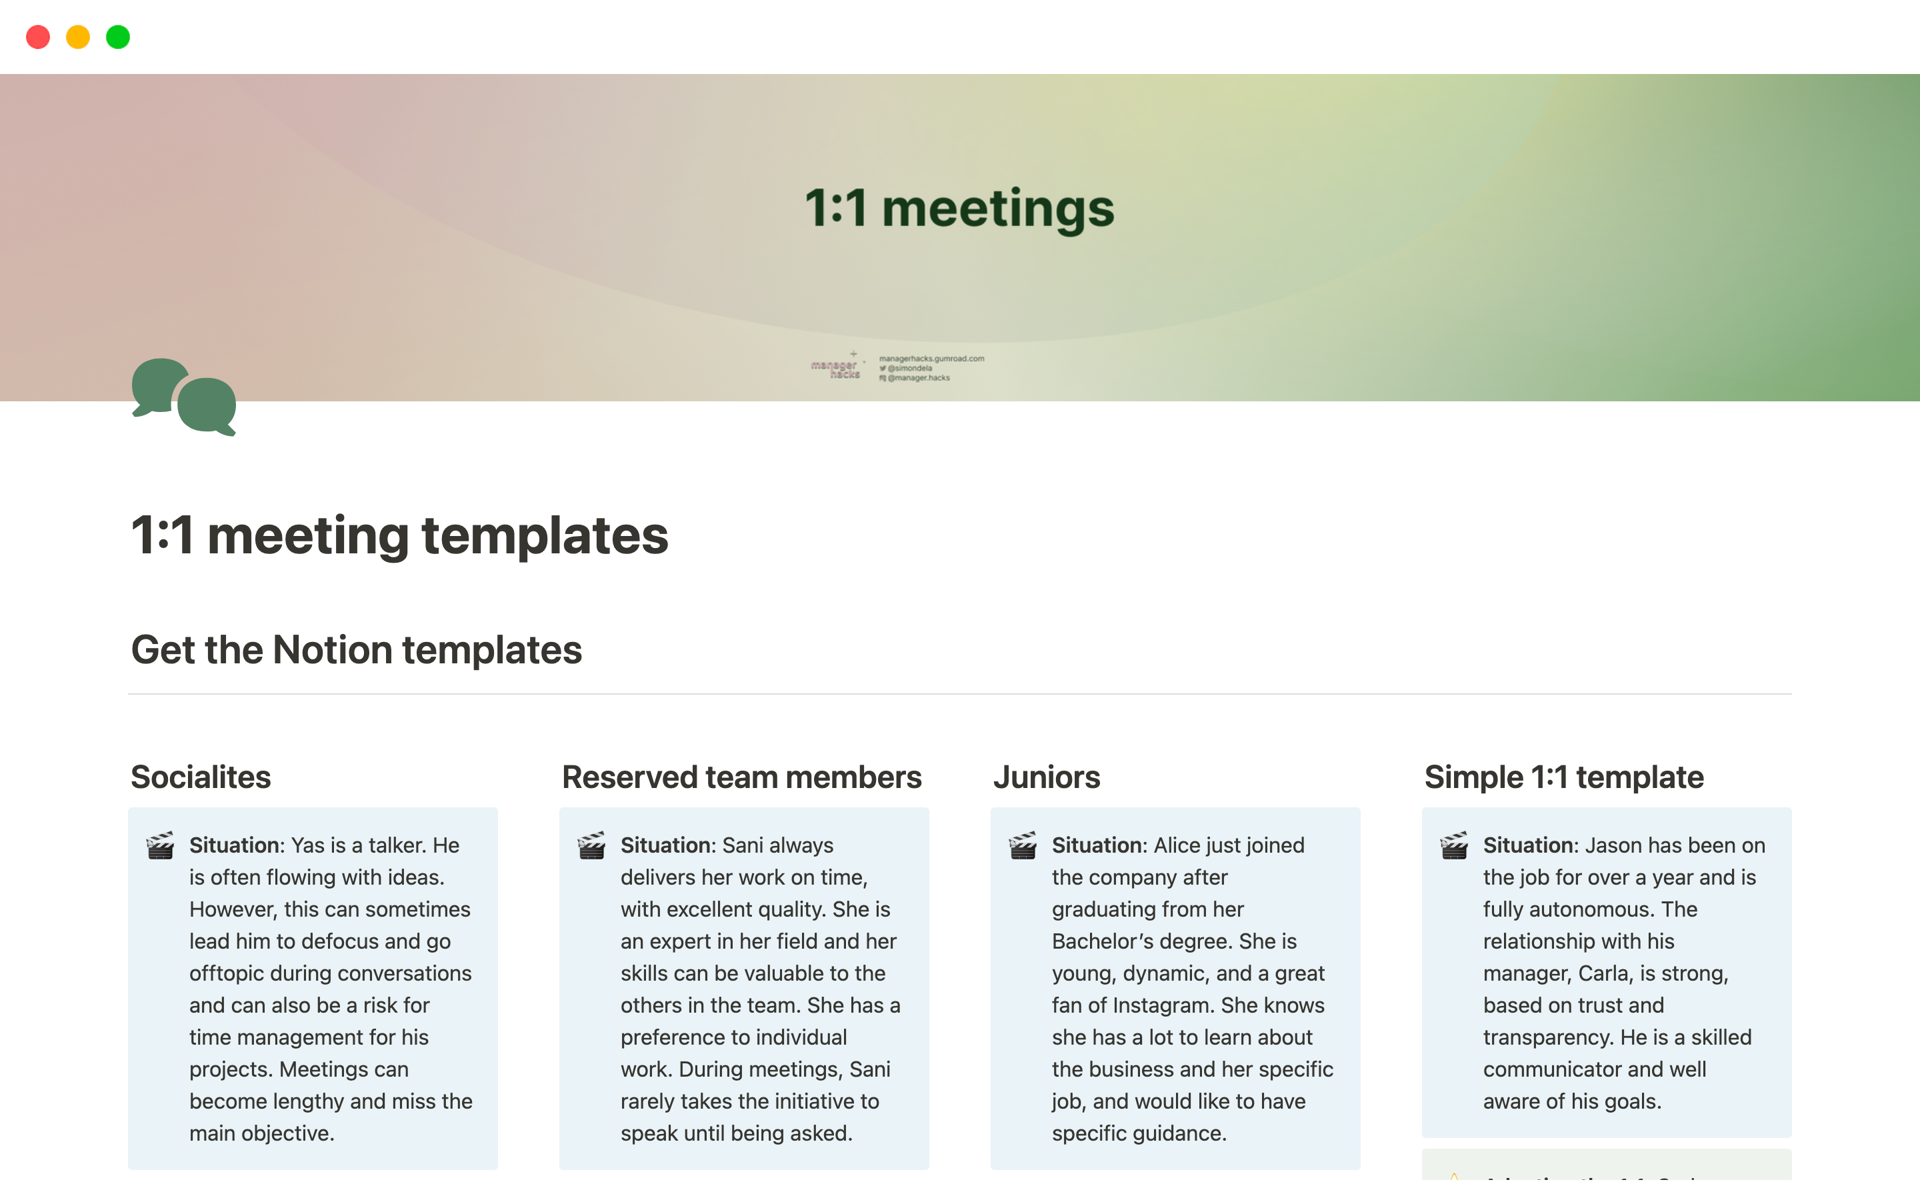 Mallin esikatselu nimelle 1:1 meeting - 4 templates to personalise your 1:1s